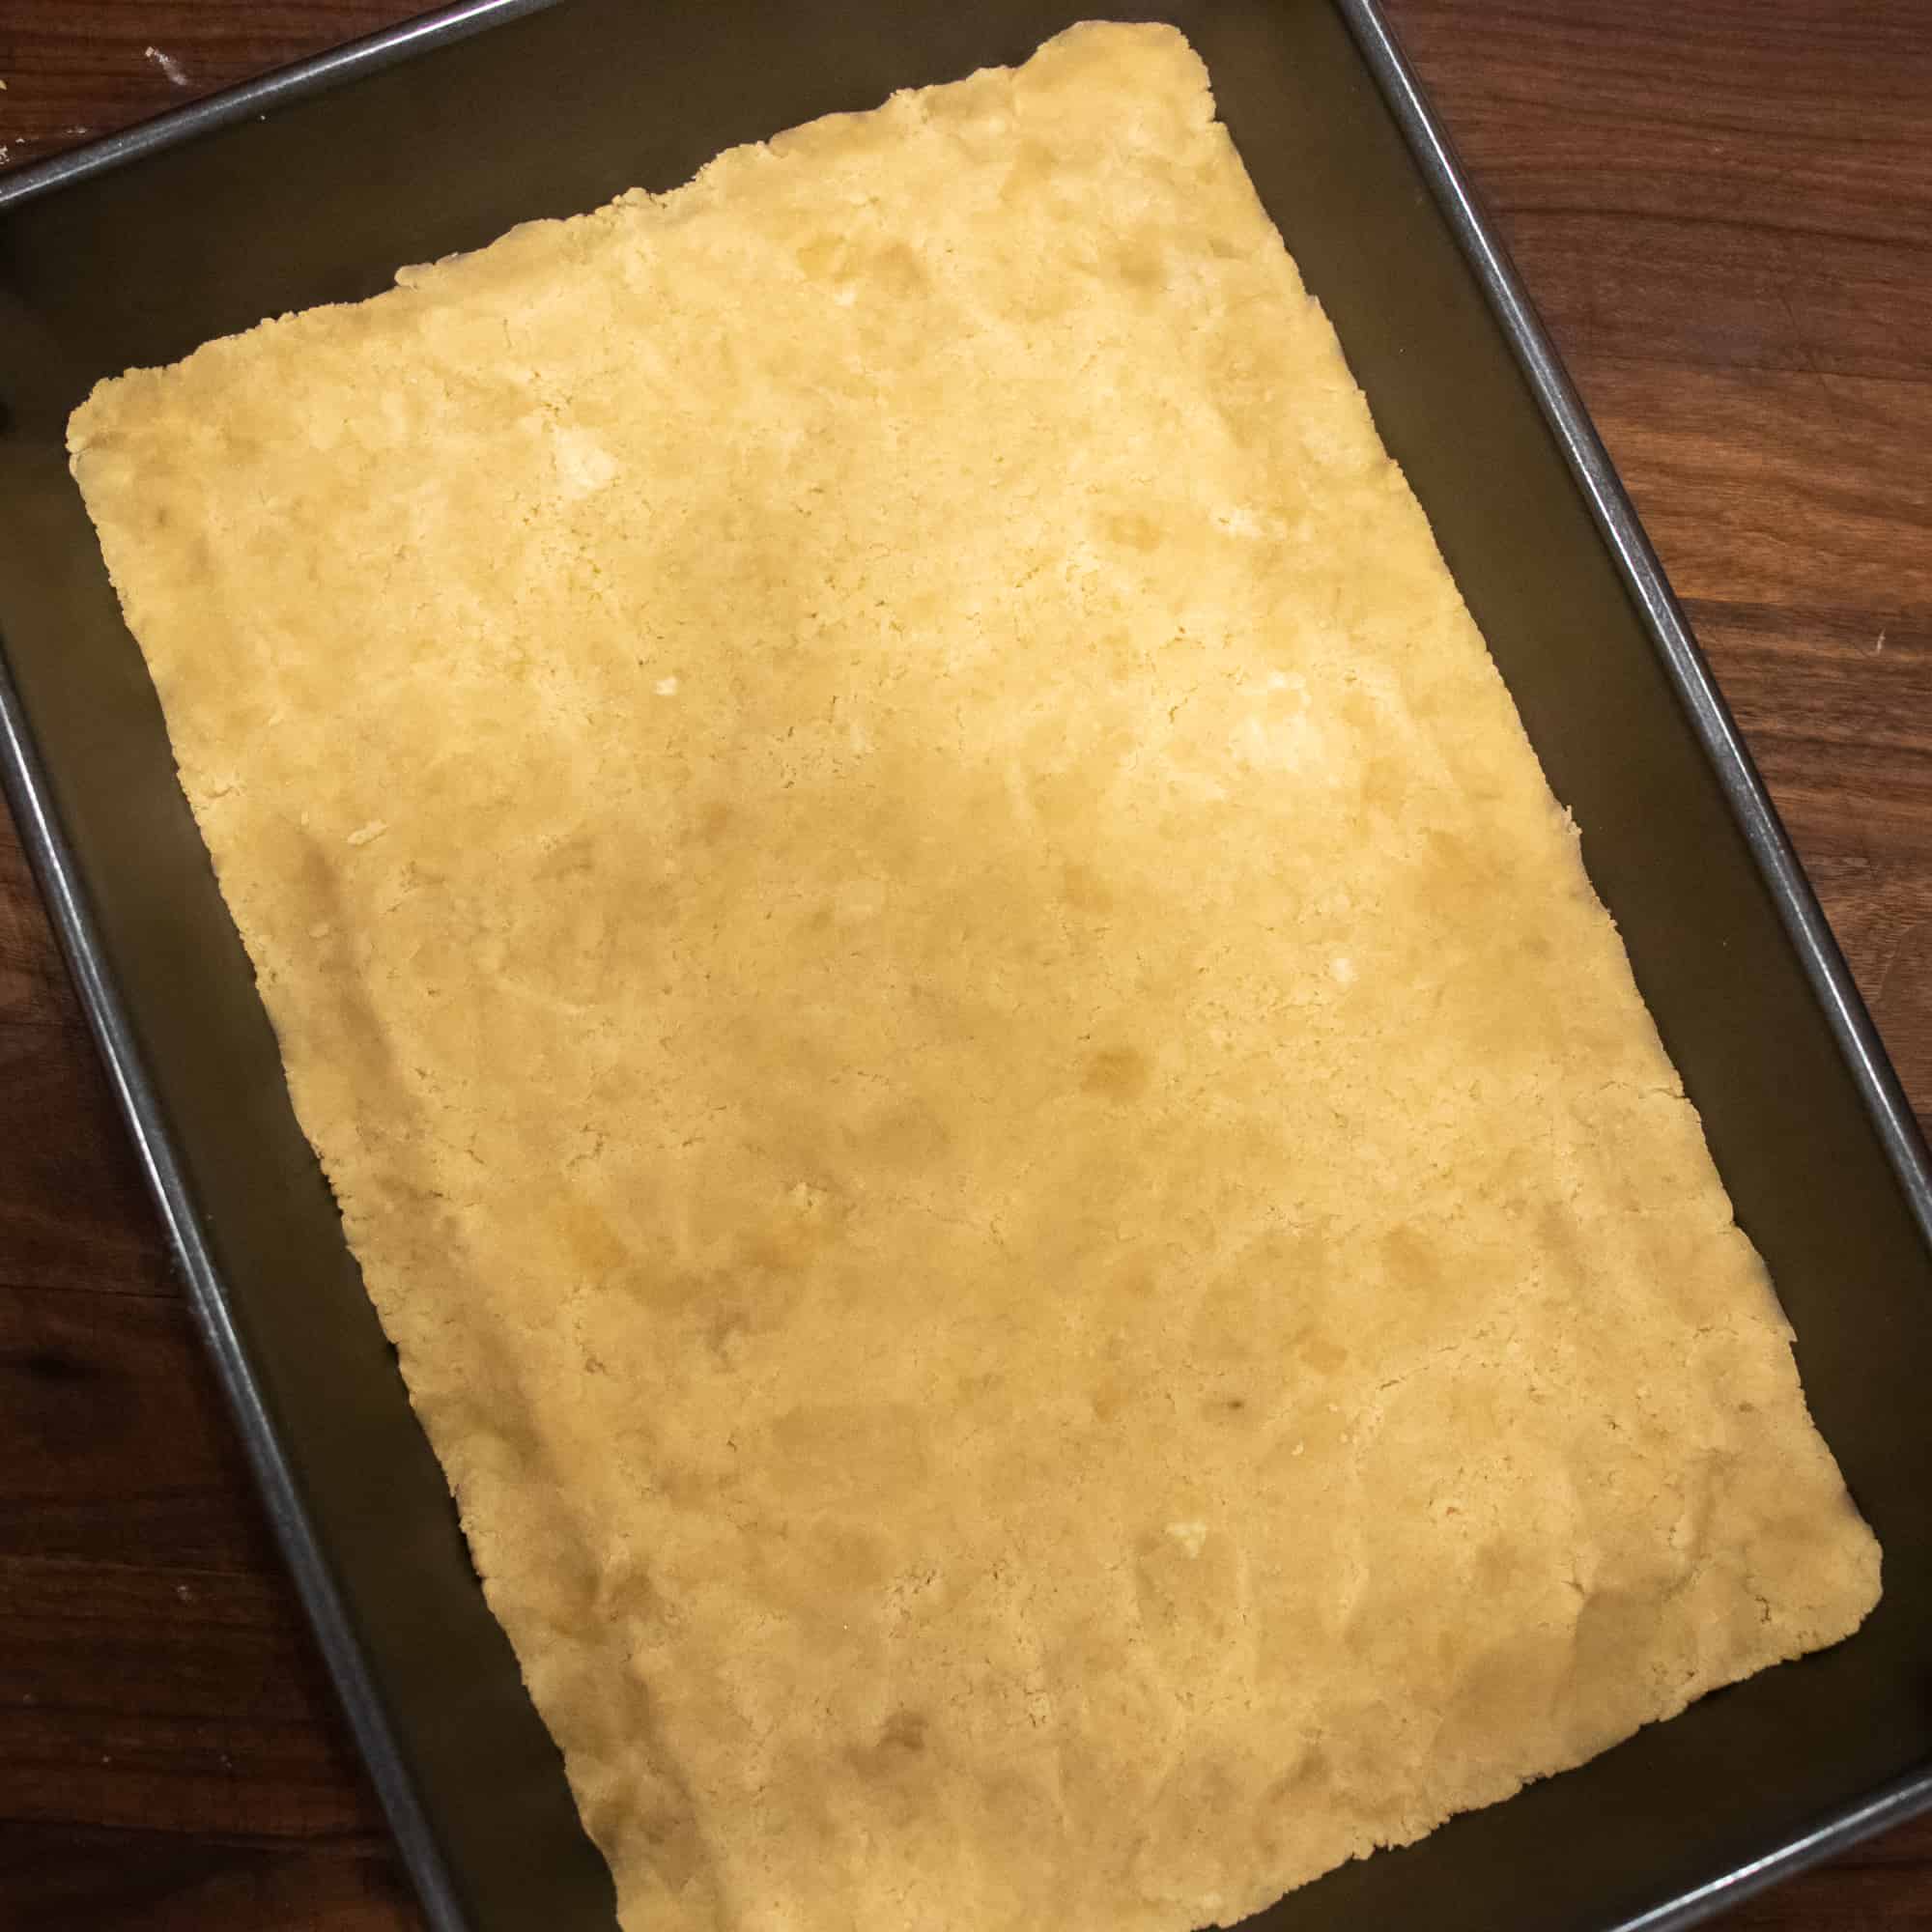 Press the dough into a 13x9 baking dish.